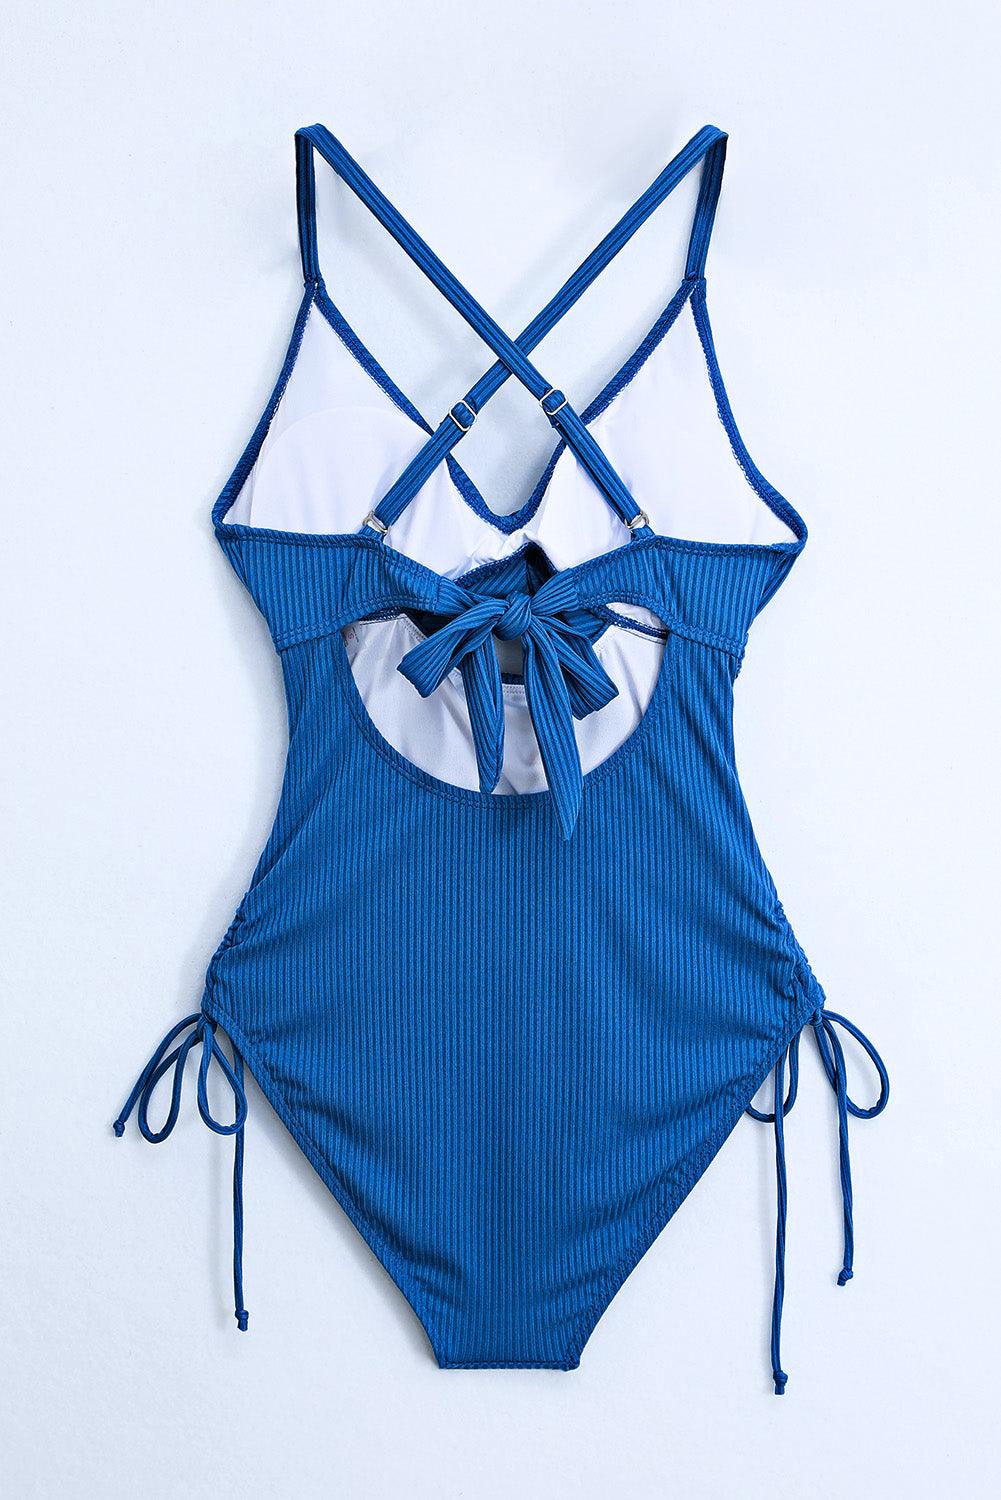 Bona Fide Fashion - Cutout V-Neck Spaghetti Strap One-Piece Swimwear - Women Fashion - Bona Fide Fashion